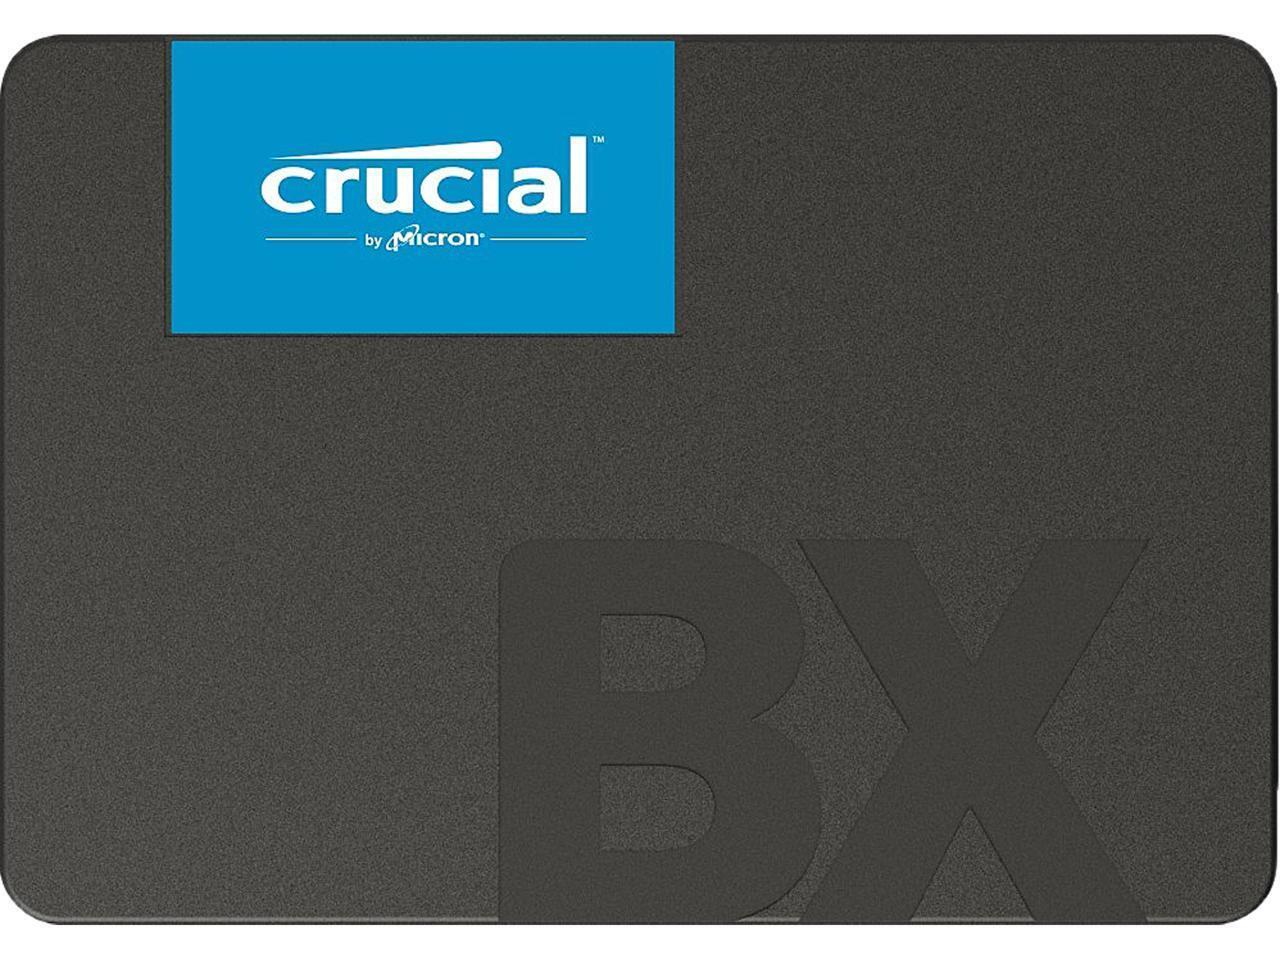 Crucial BX500 1TB 3D NAND SATA 2.5-Inch Internal SSD, up to 540 MB/s - CT1000BX5